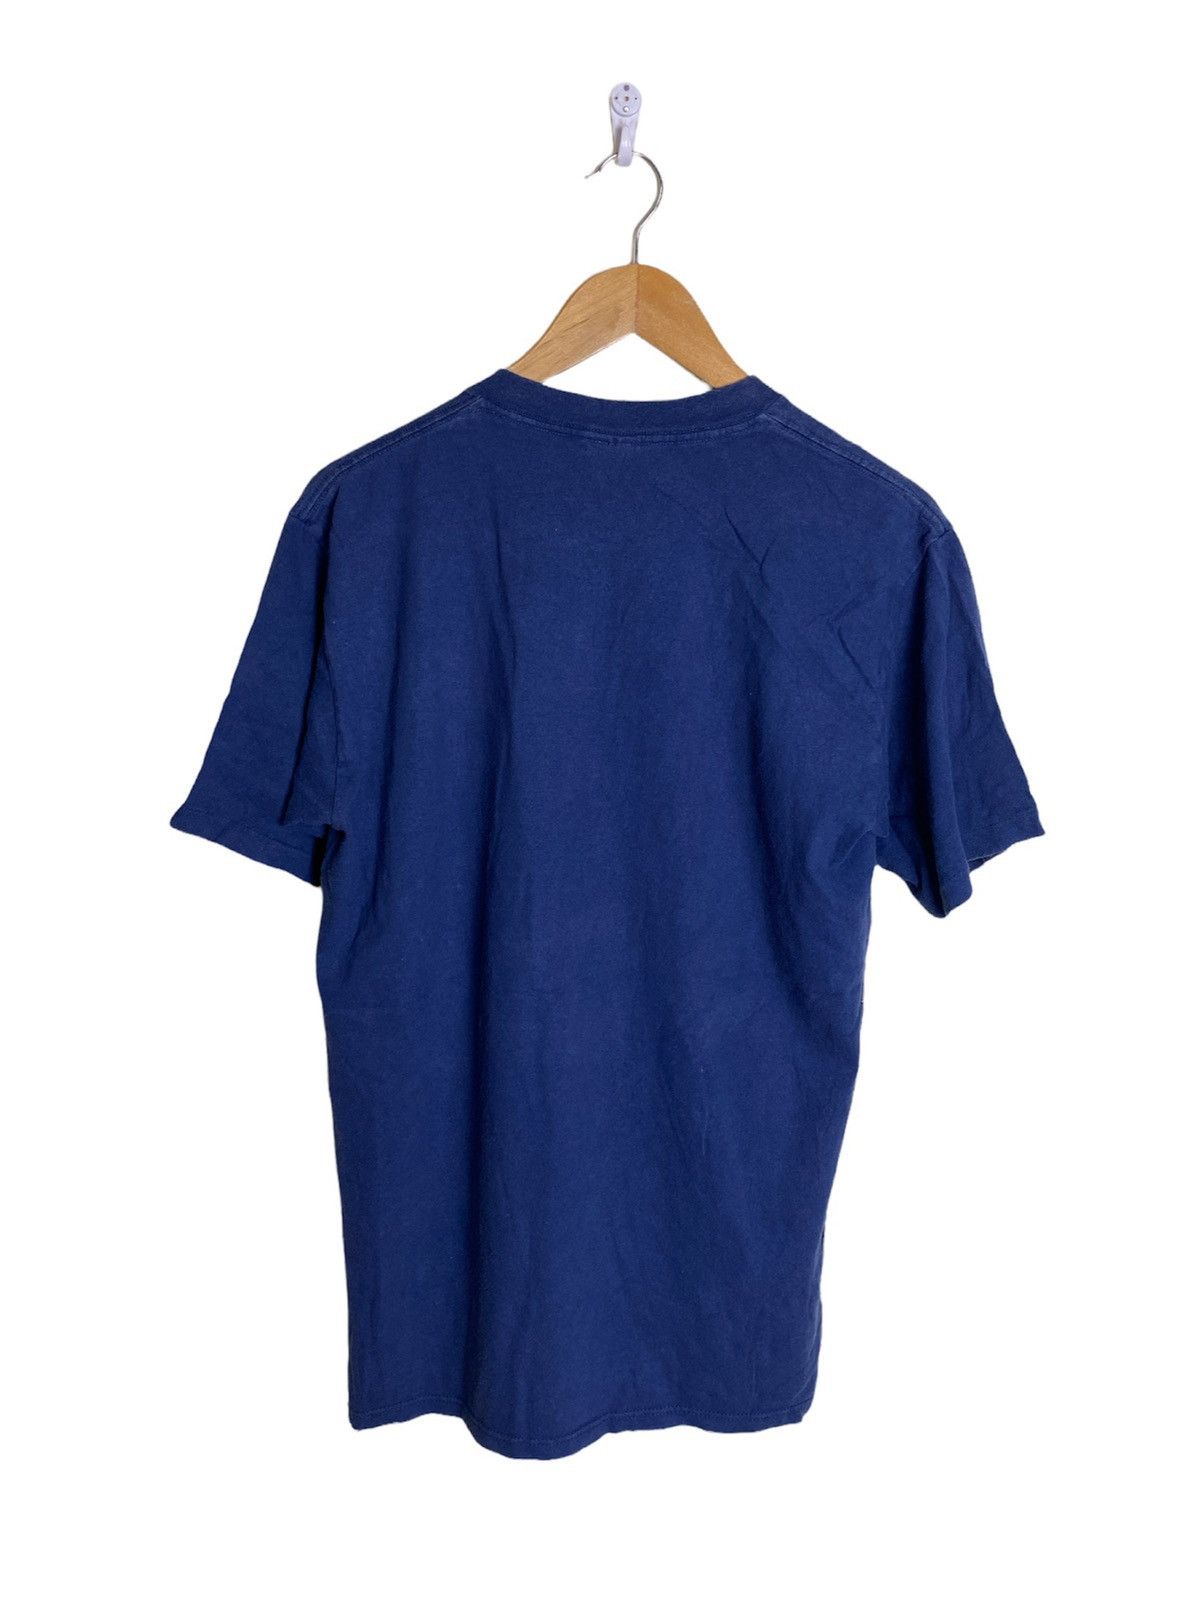 Vintage 1993 Dallas Cowboys Starter Tshirt - 4